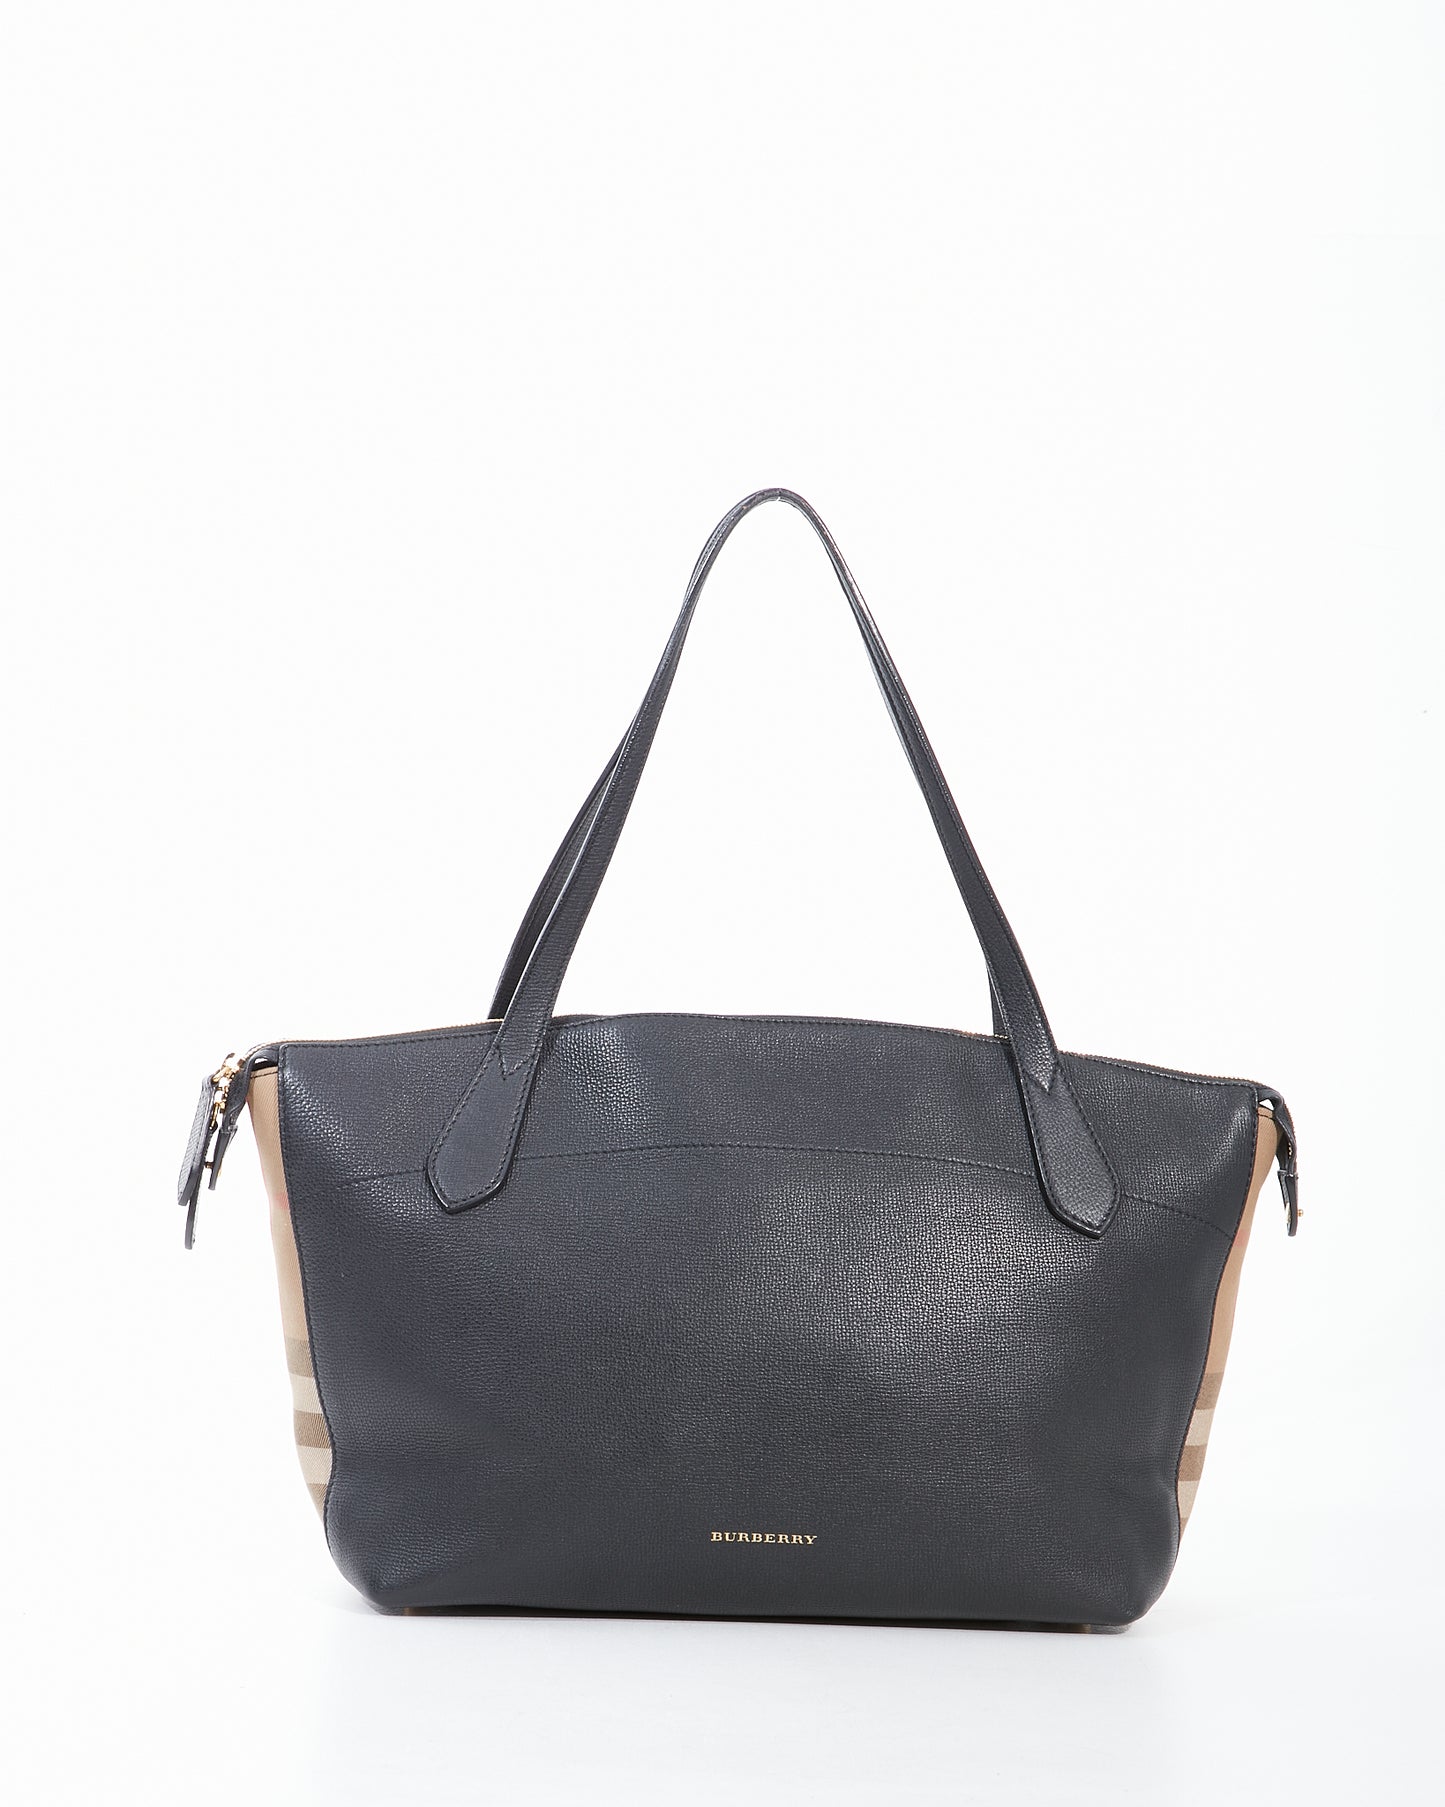 Burberry Black Leather & Canvas Tote Zipper Bag